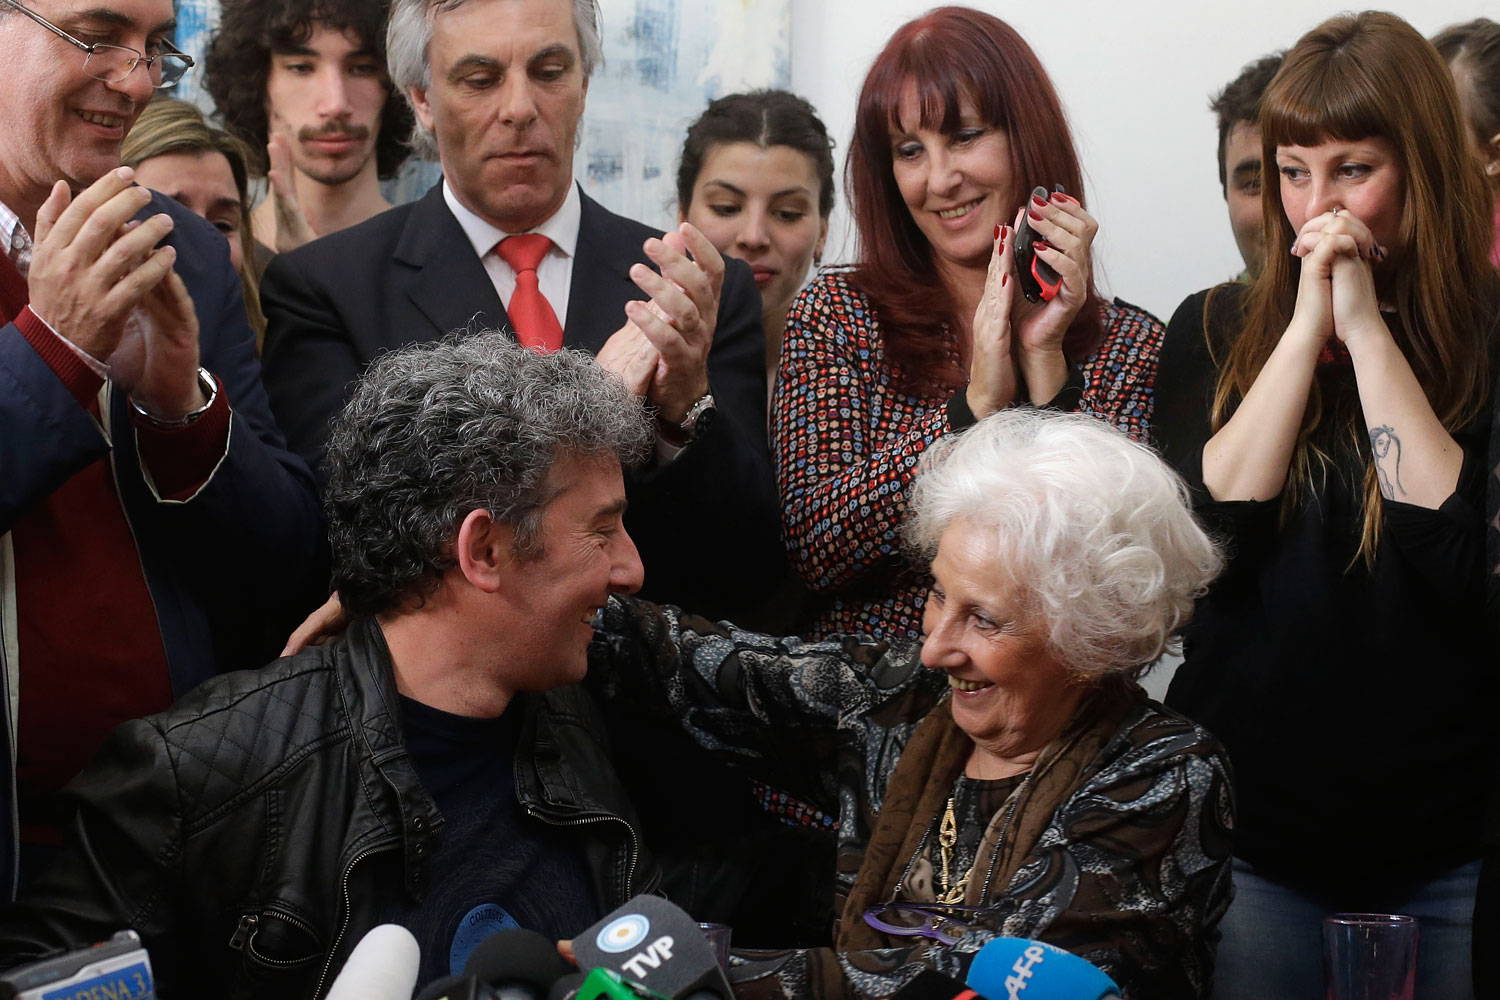 Estela de Carlotto, president of Grandmothers of Plaza de Mayo, right, and her grandson Ignacio Hurban, left, hug during a news conference in Buenos Aires, Aug. 8, 2014. (Victor R. Caivano—AP)